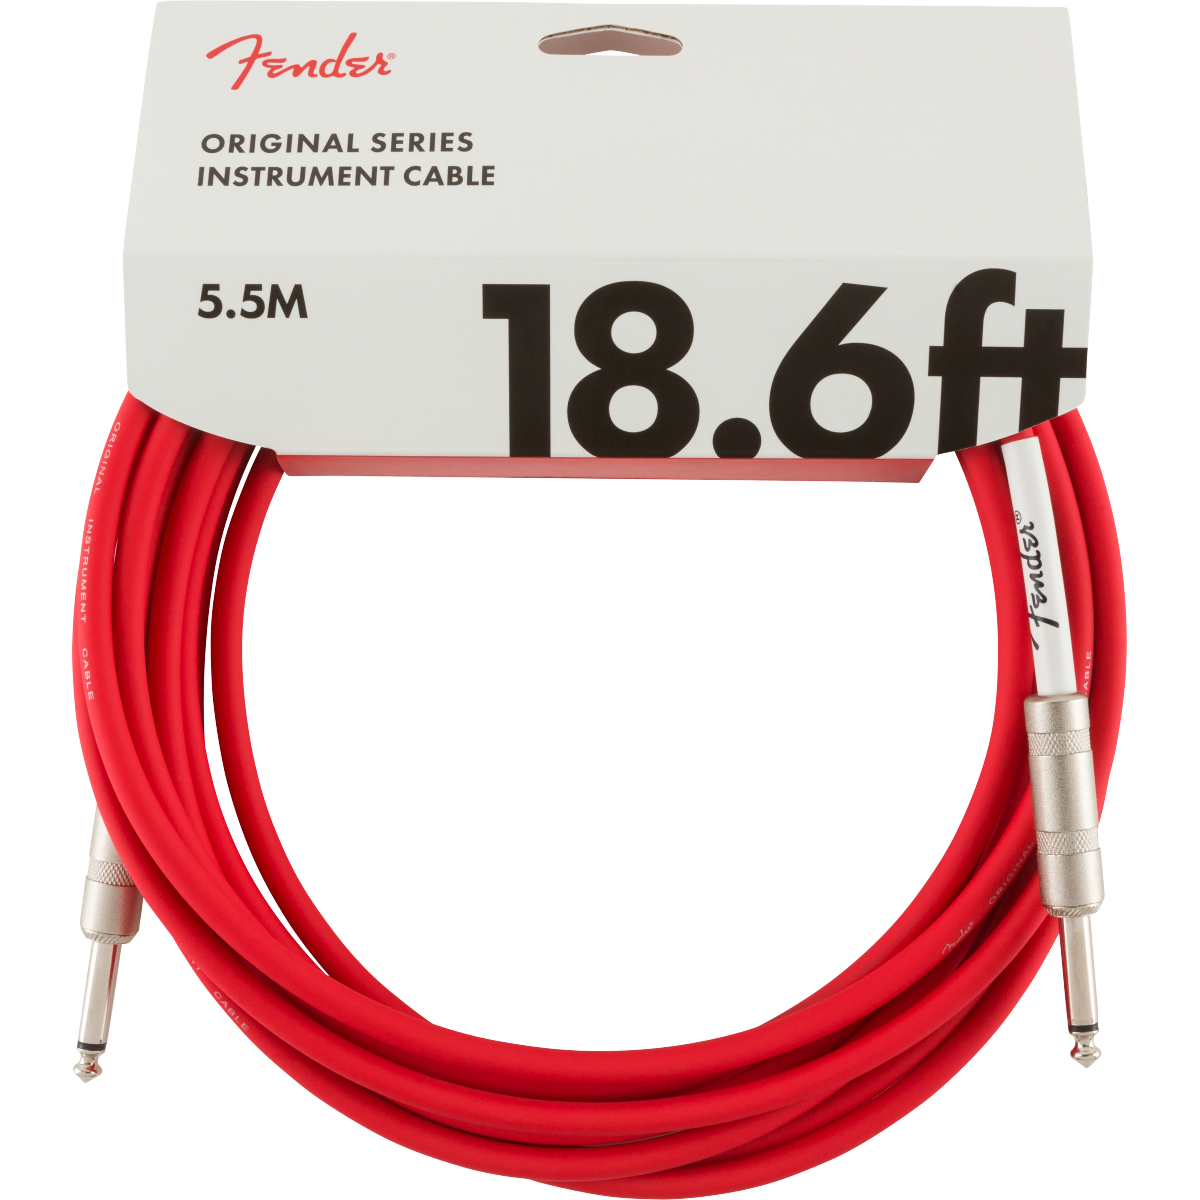 Fender Original Series Instrument Cable 18.6ft Fiesta Red